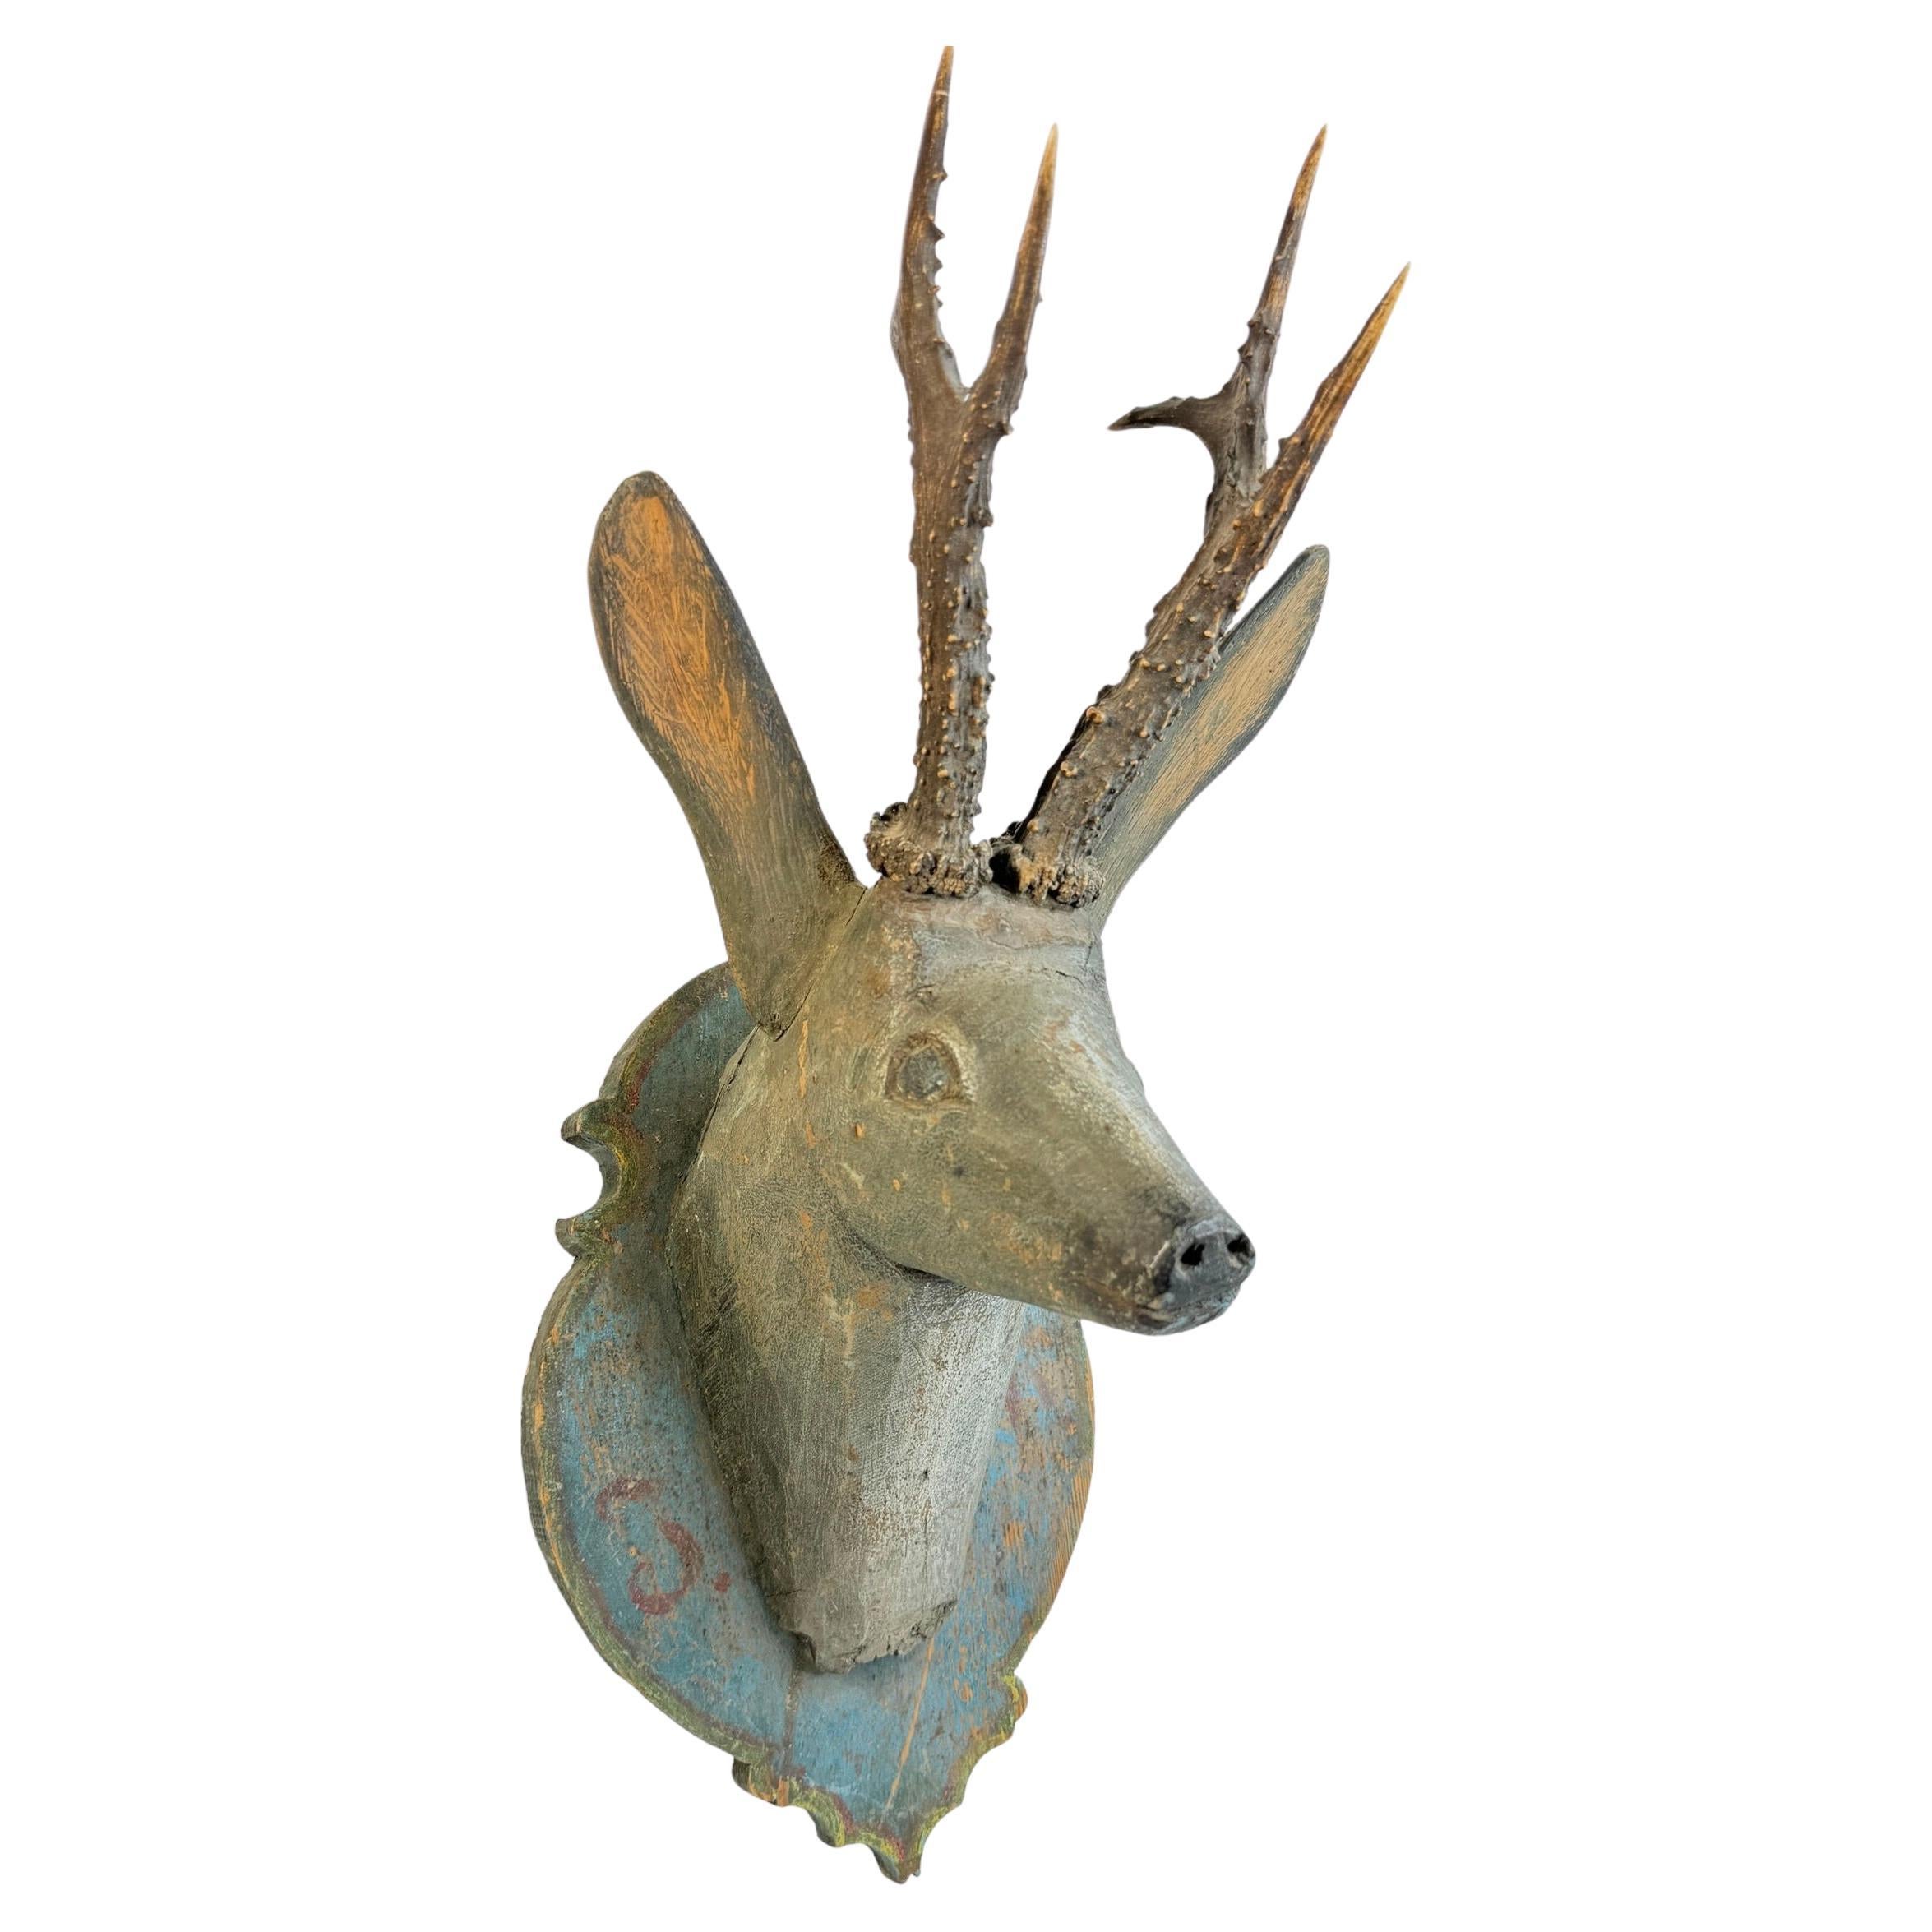 Baroque Folk Art Wood Carved Deer Head with Real Antlers, Austria 18th Century